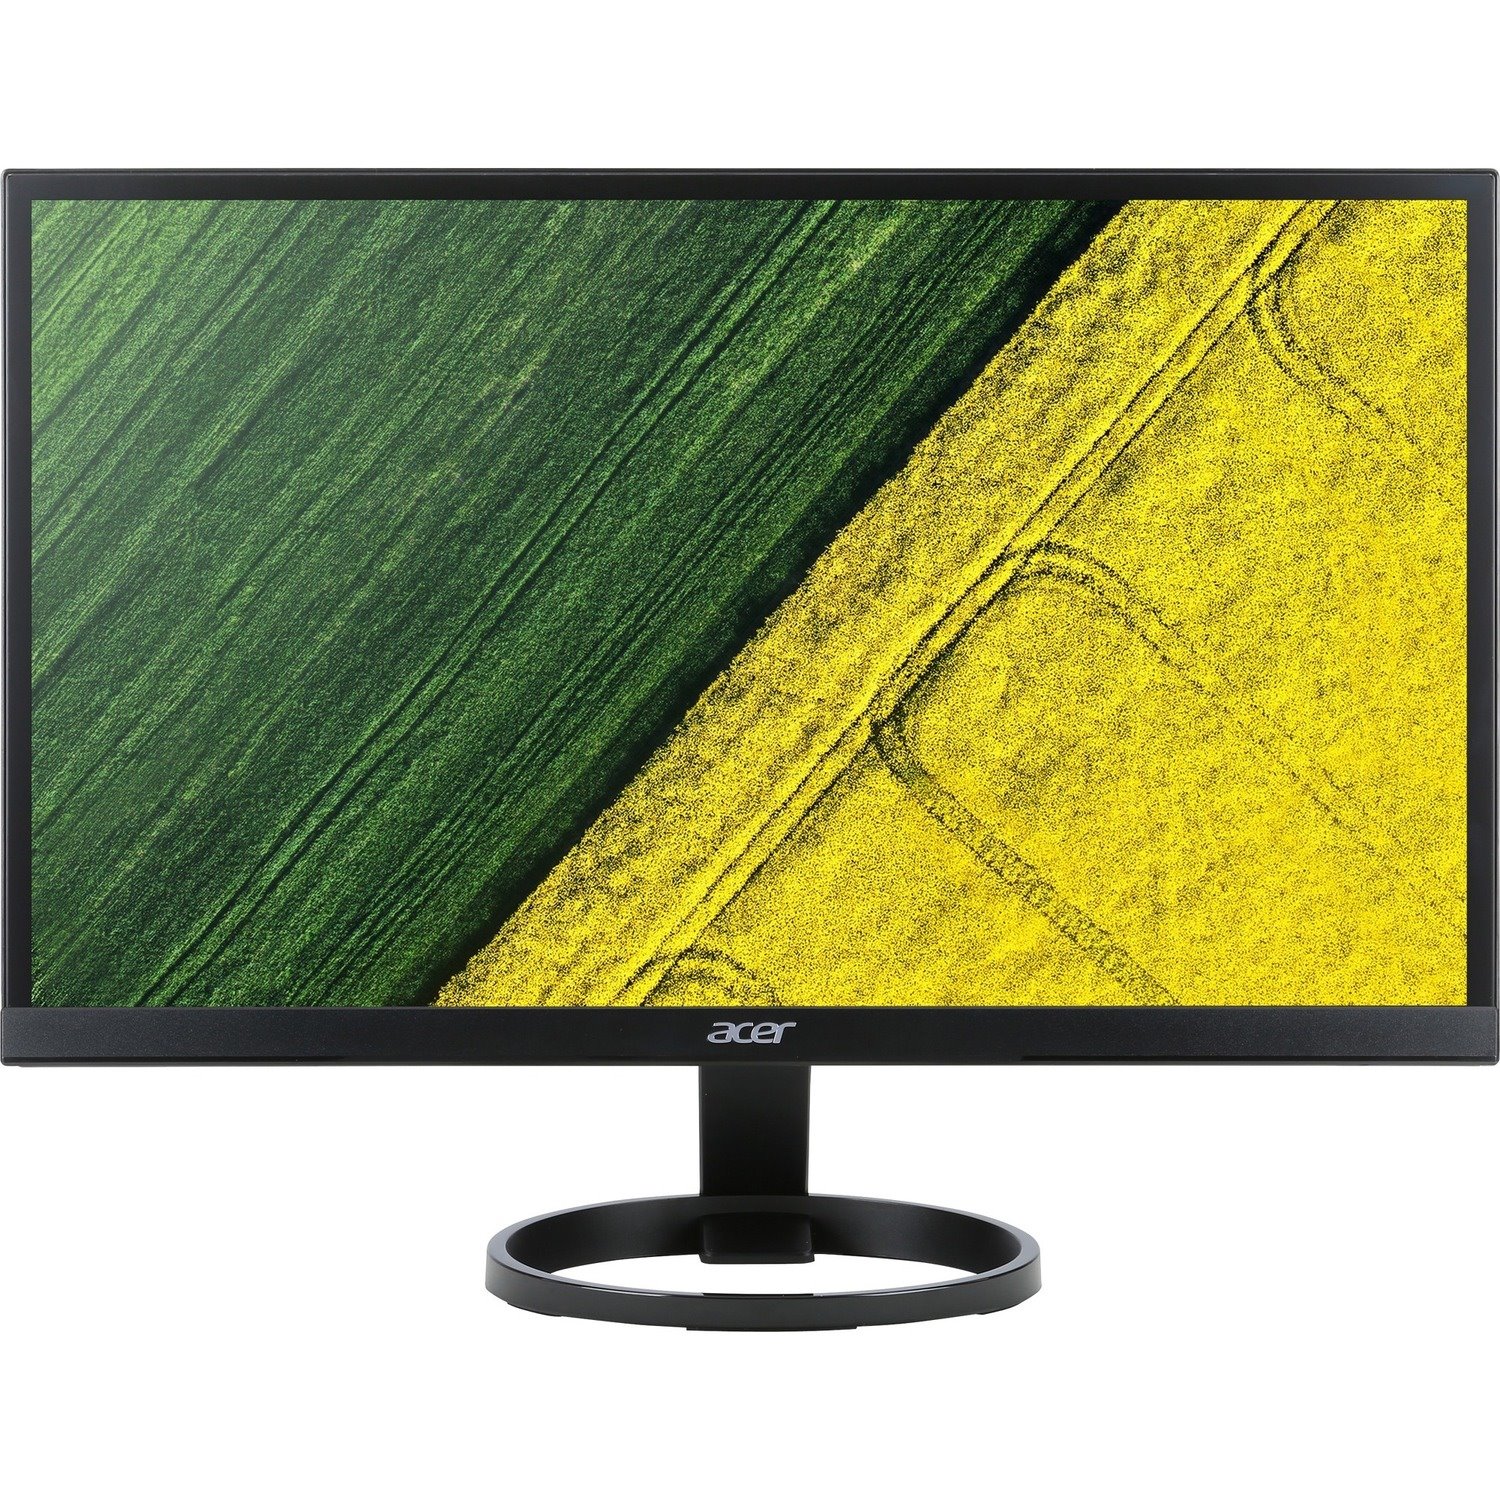 Acer R241Y 23.8" Full HD LED LCD Monitor - 16:9 - Black